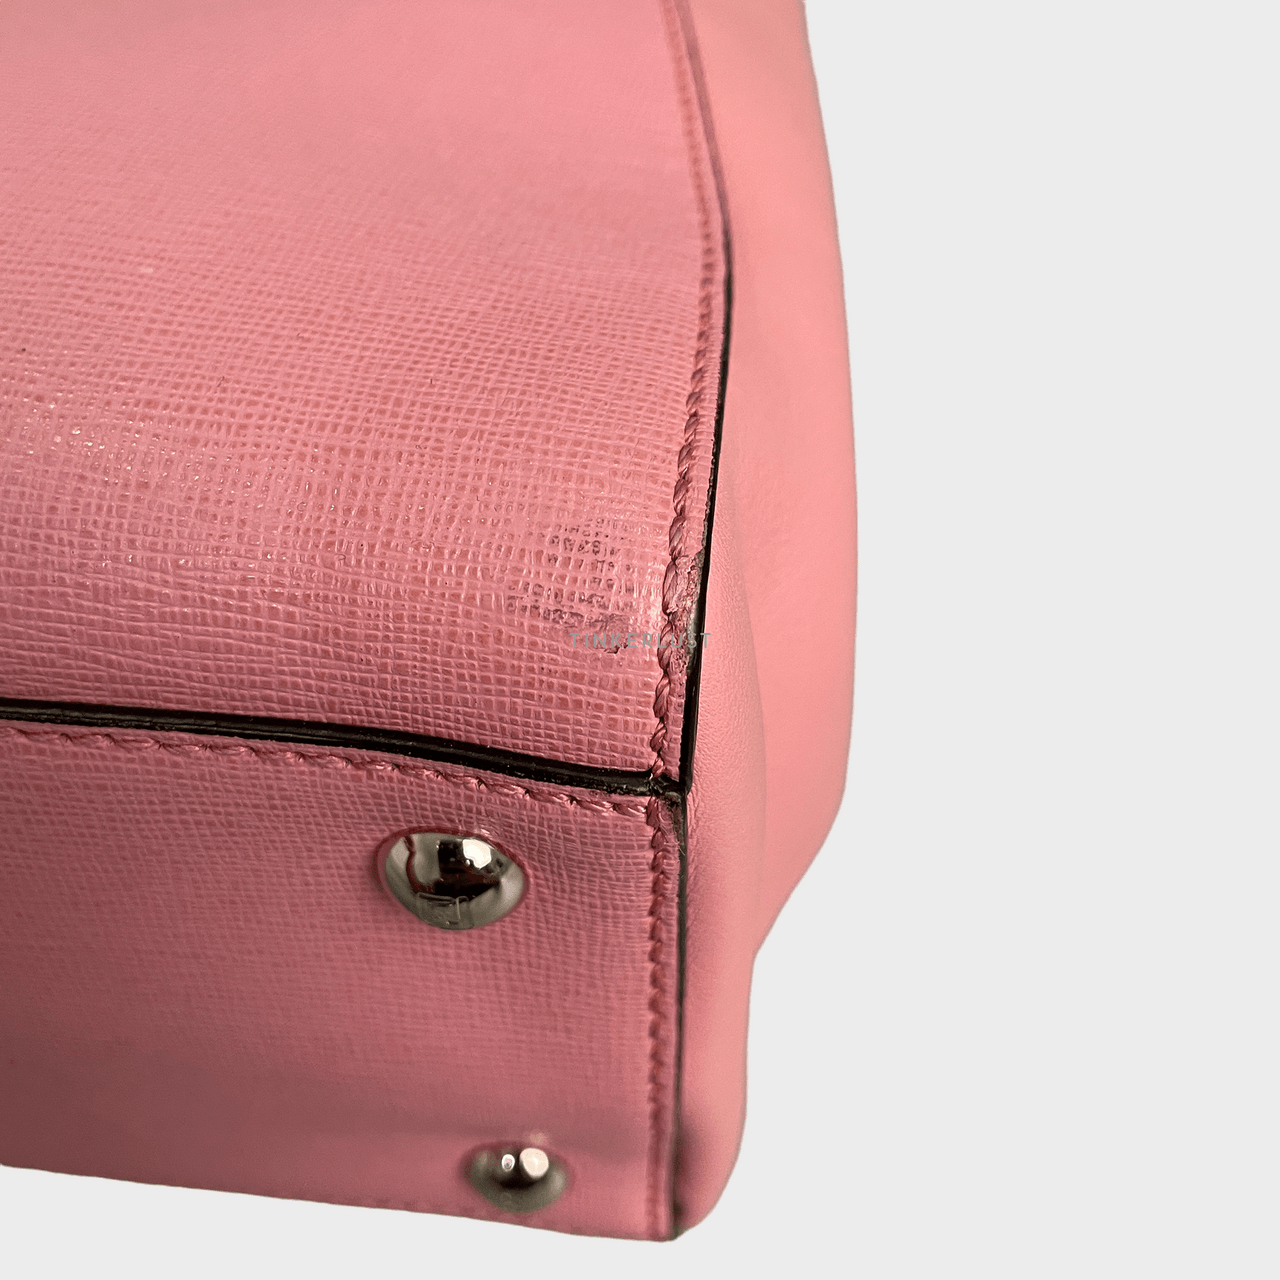 Fendi 2jours Pink Satchel Bag